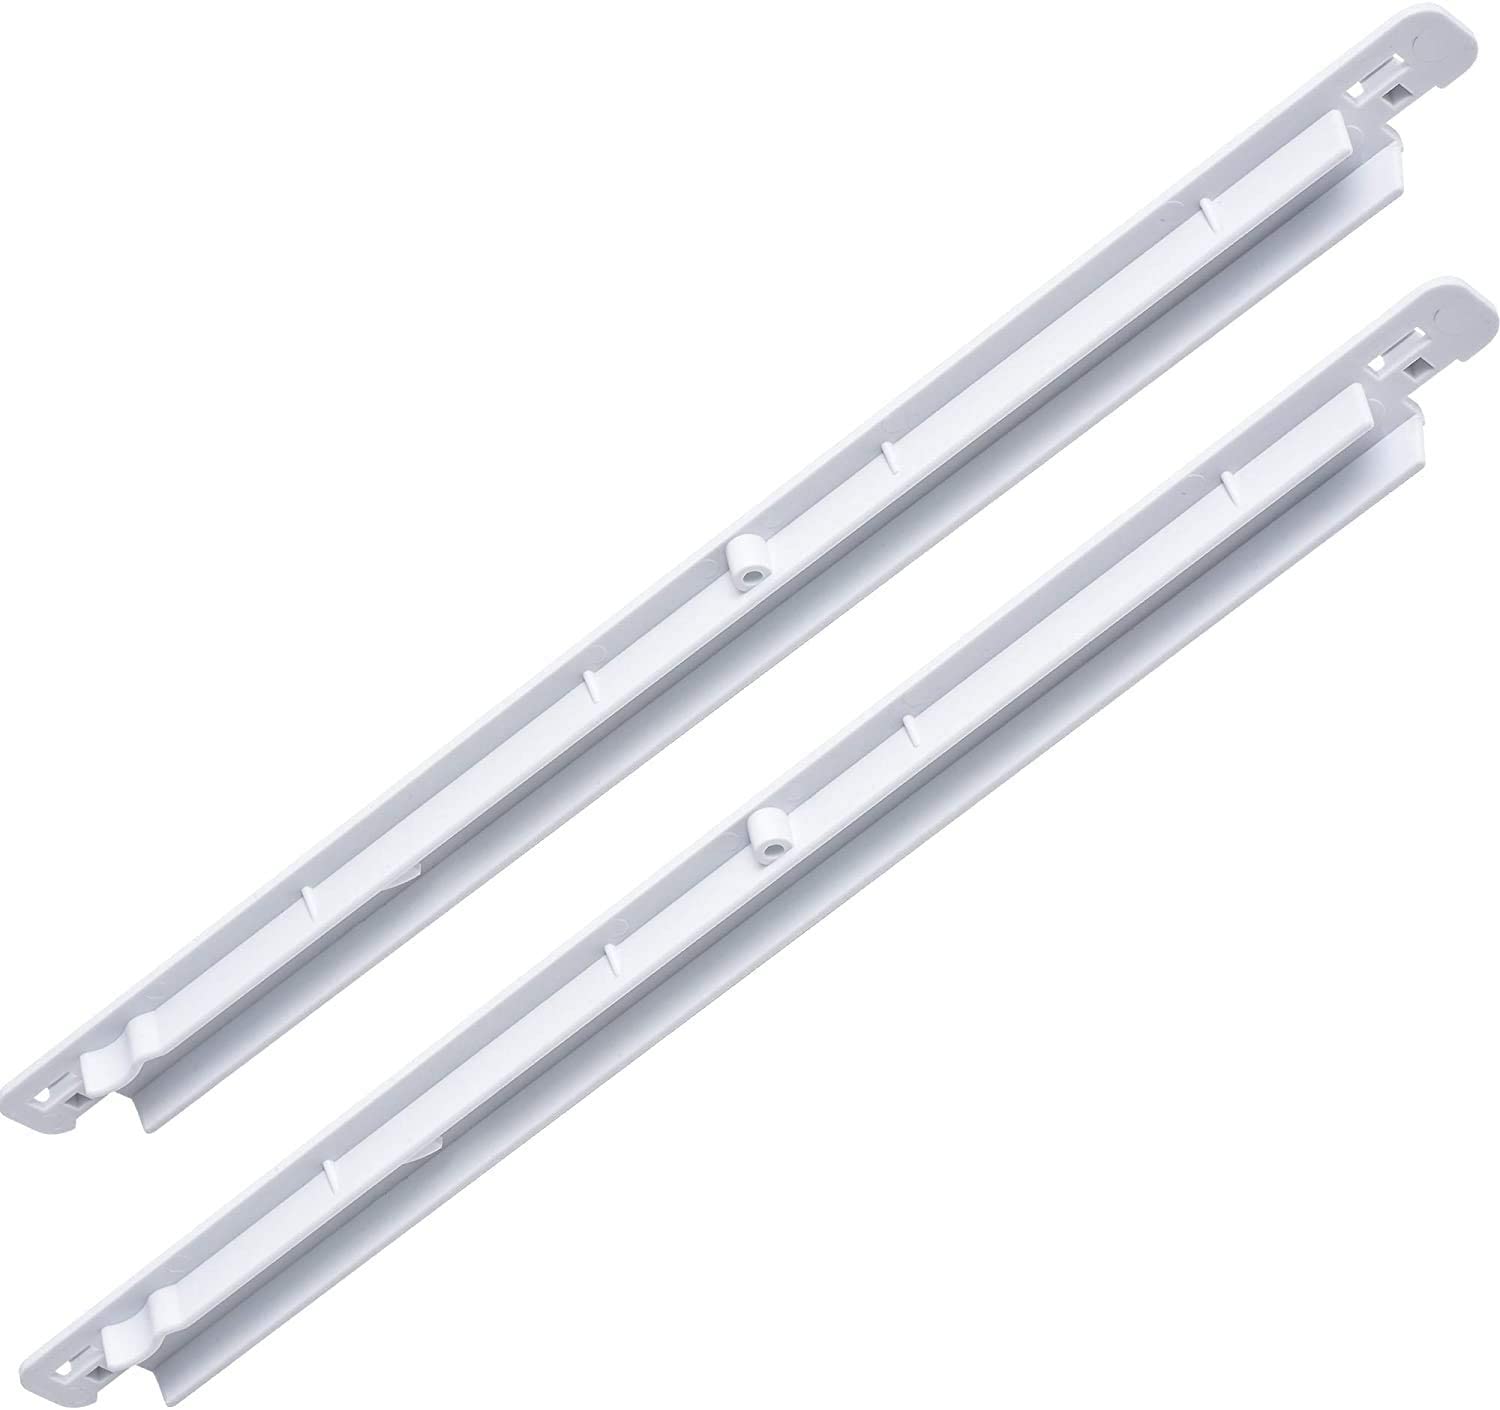 Frigidaire Refrigerator Pantry Drawer Slide Rail – Left Hand. Part #240365401